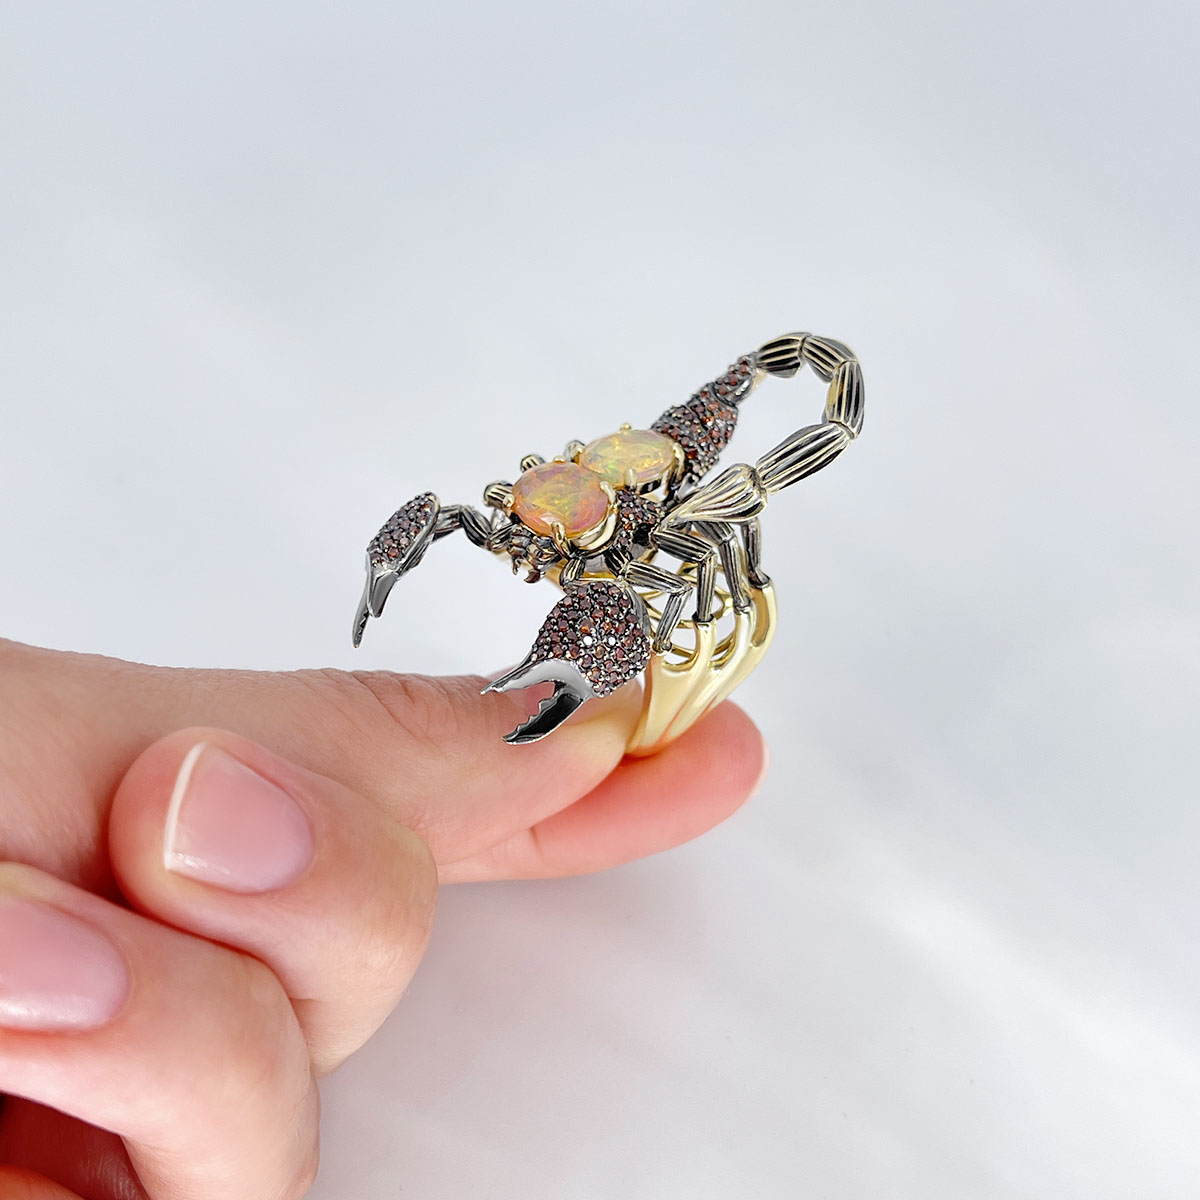 Кольцо Скорпион с опалом, бриллиантами из желтого золота 585 пробы, фото № 5